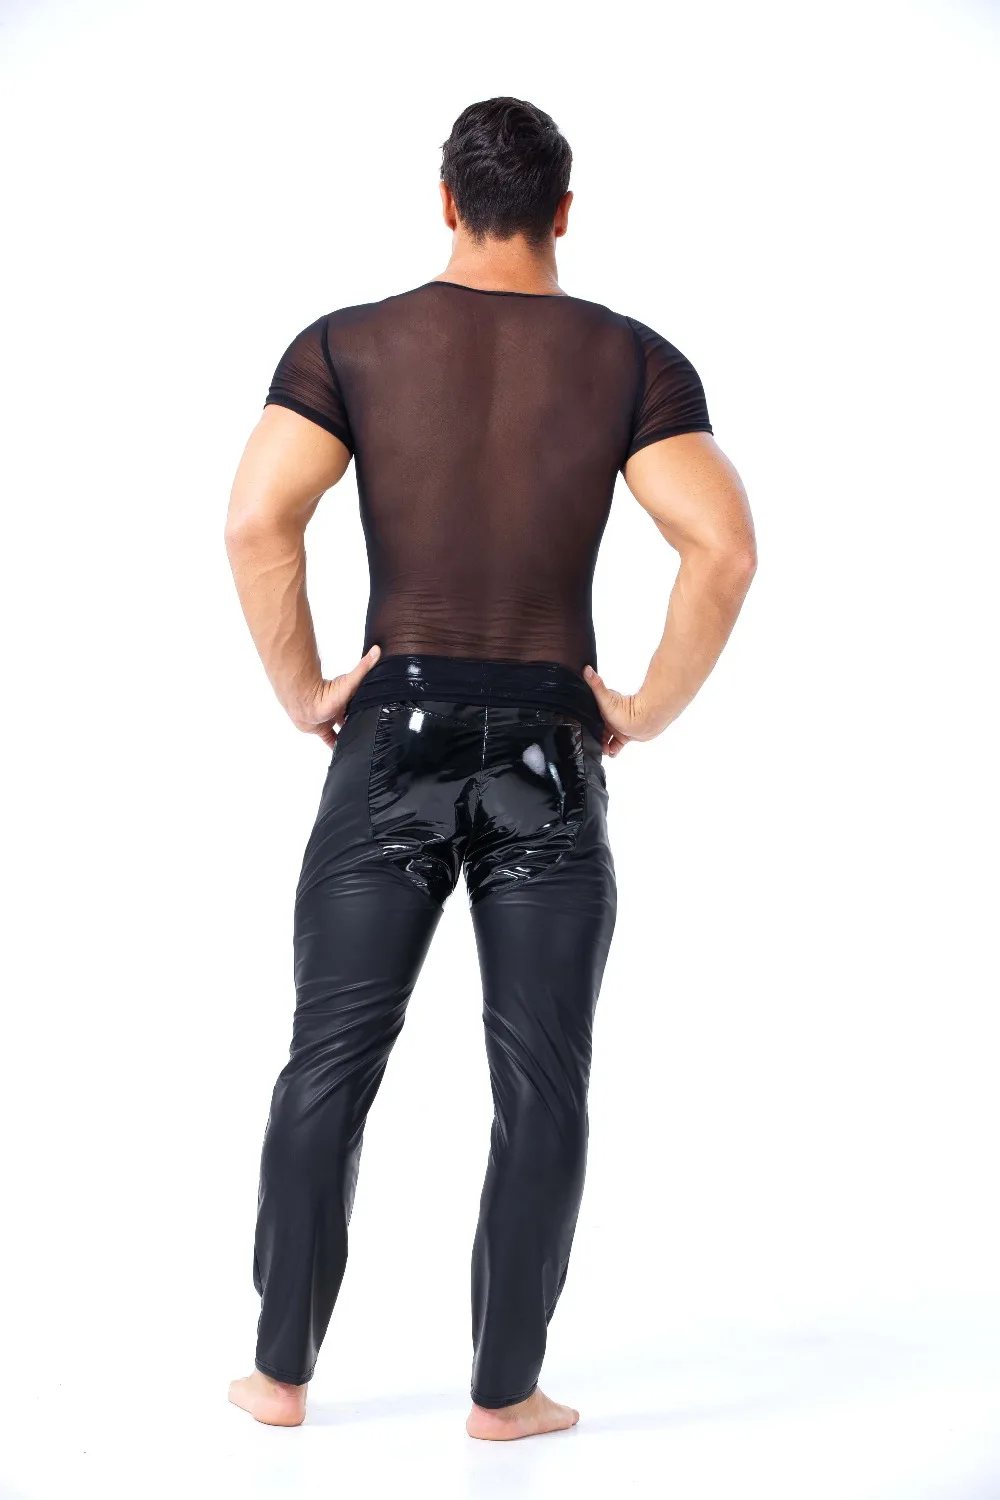 MenFaux Leather Tops Latex Catsuit Masquerade Super man Cosplay Halloween Party Dress Men Zentai Gay Fetish Wear Z6027